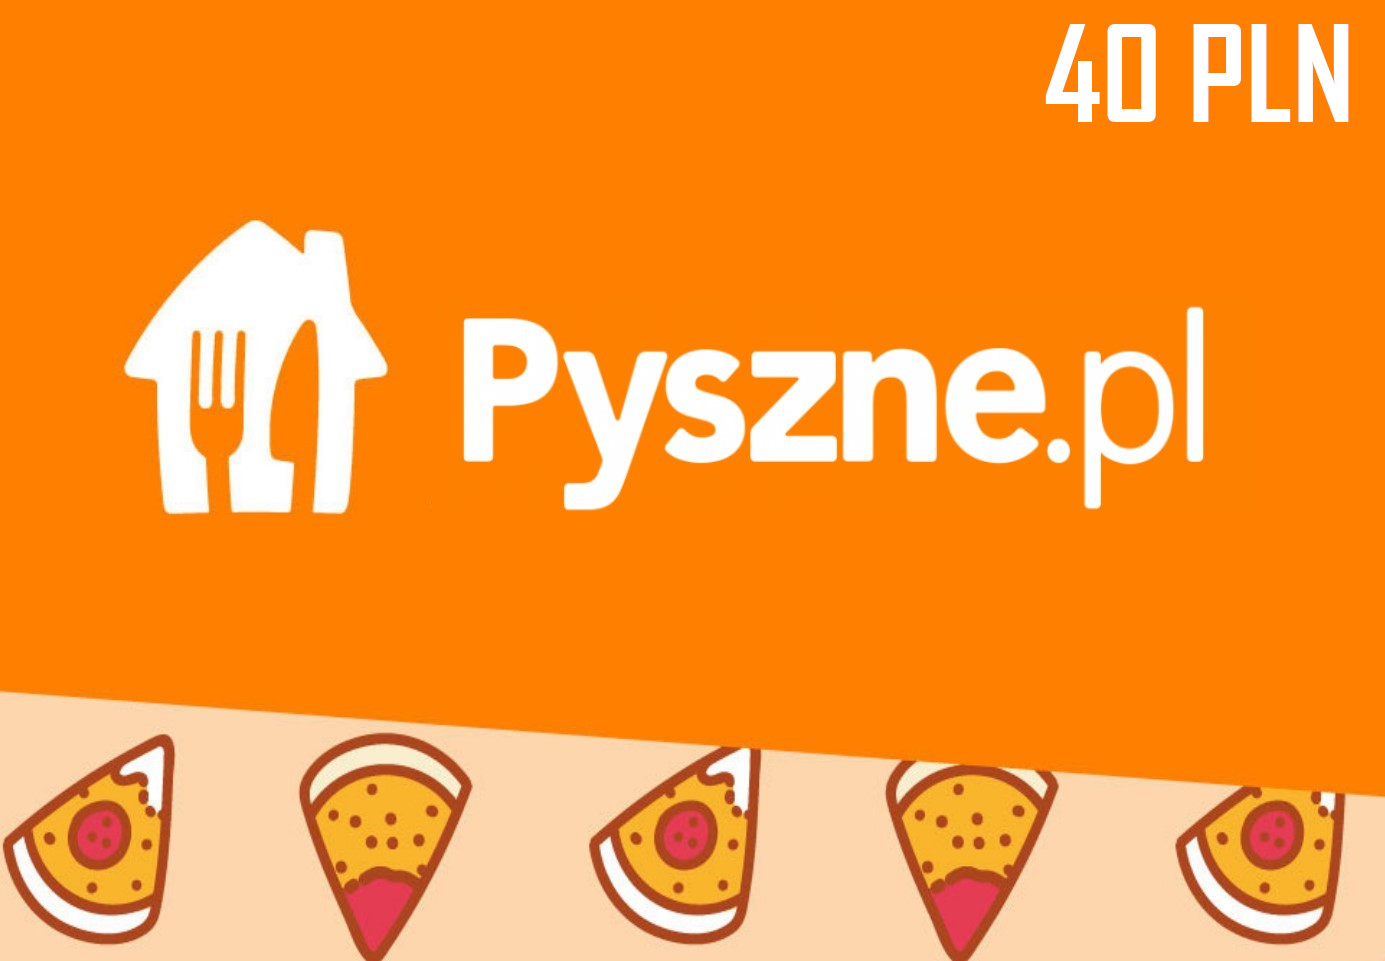 Pyszne.pl 40 PLN Gift Card PL, $11.82